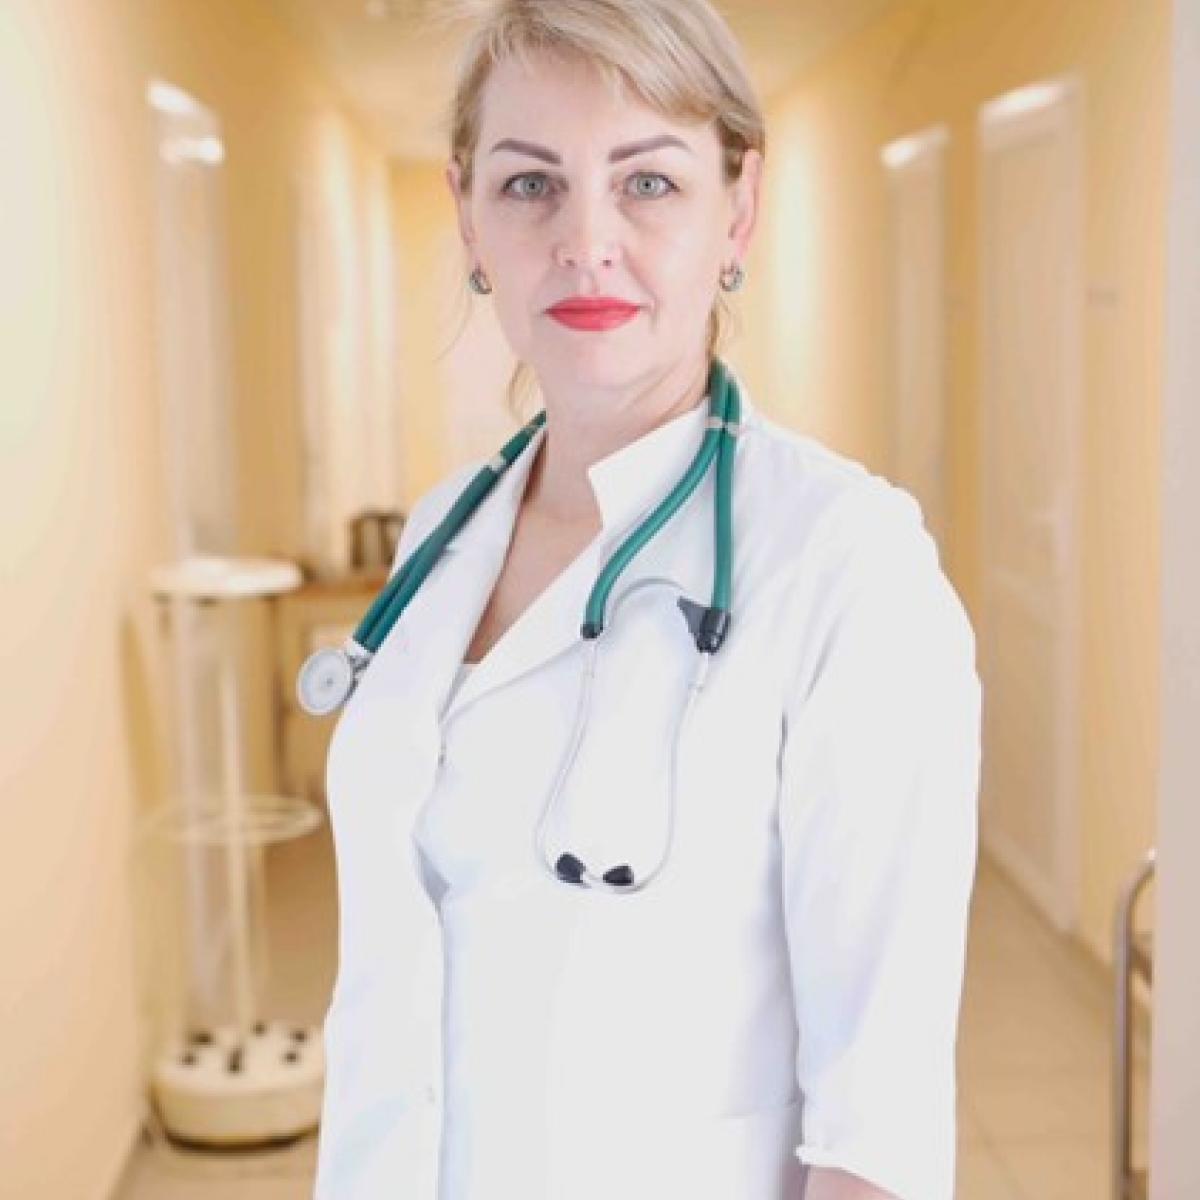 Dr. Natalia, a tuberculosis doctor in Donetsk region, Ukraine